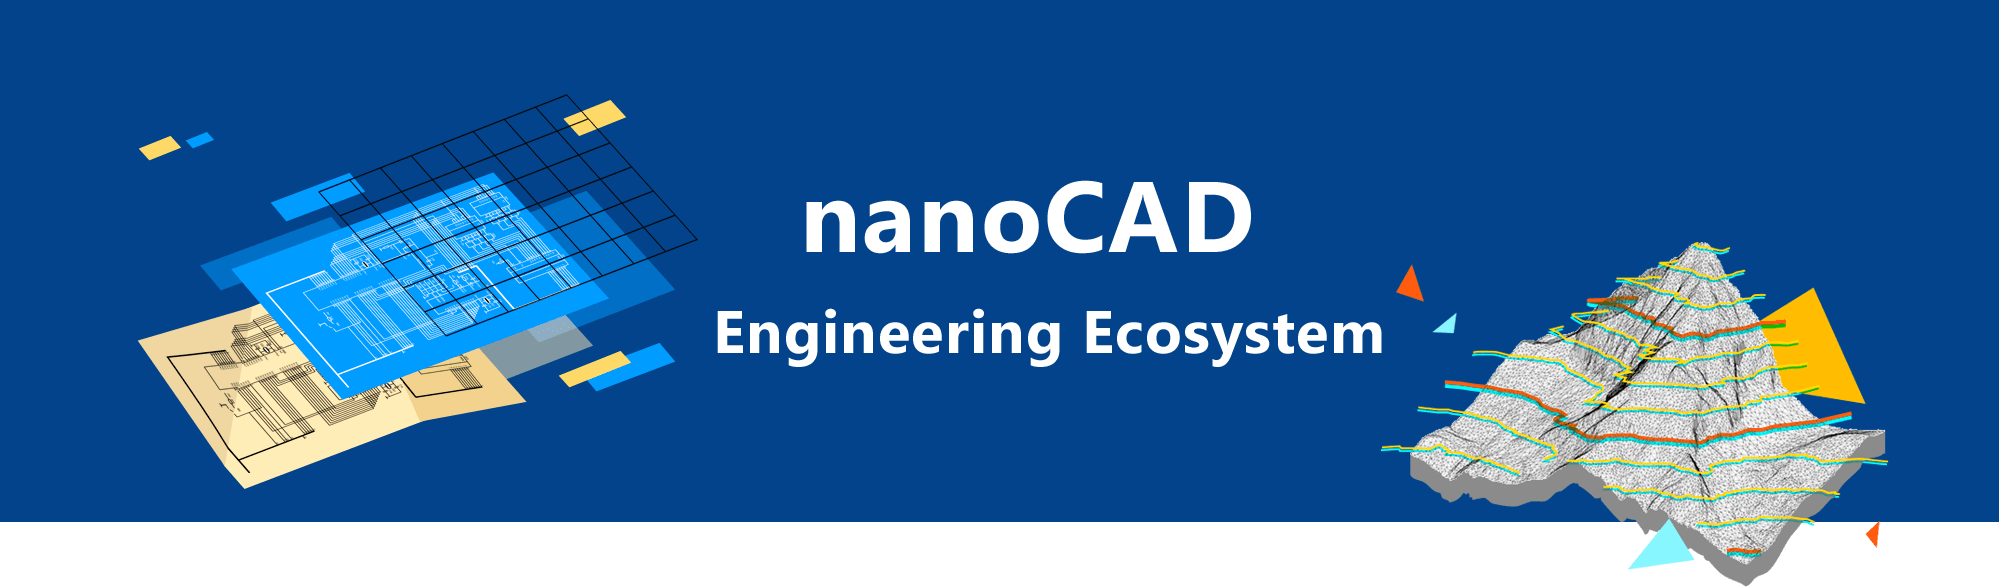 nanoCAD